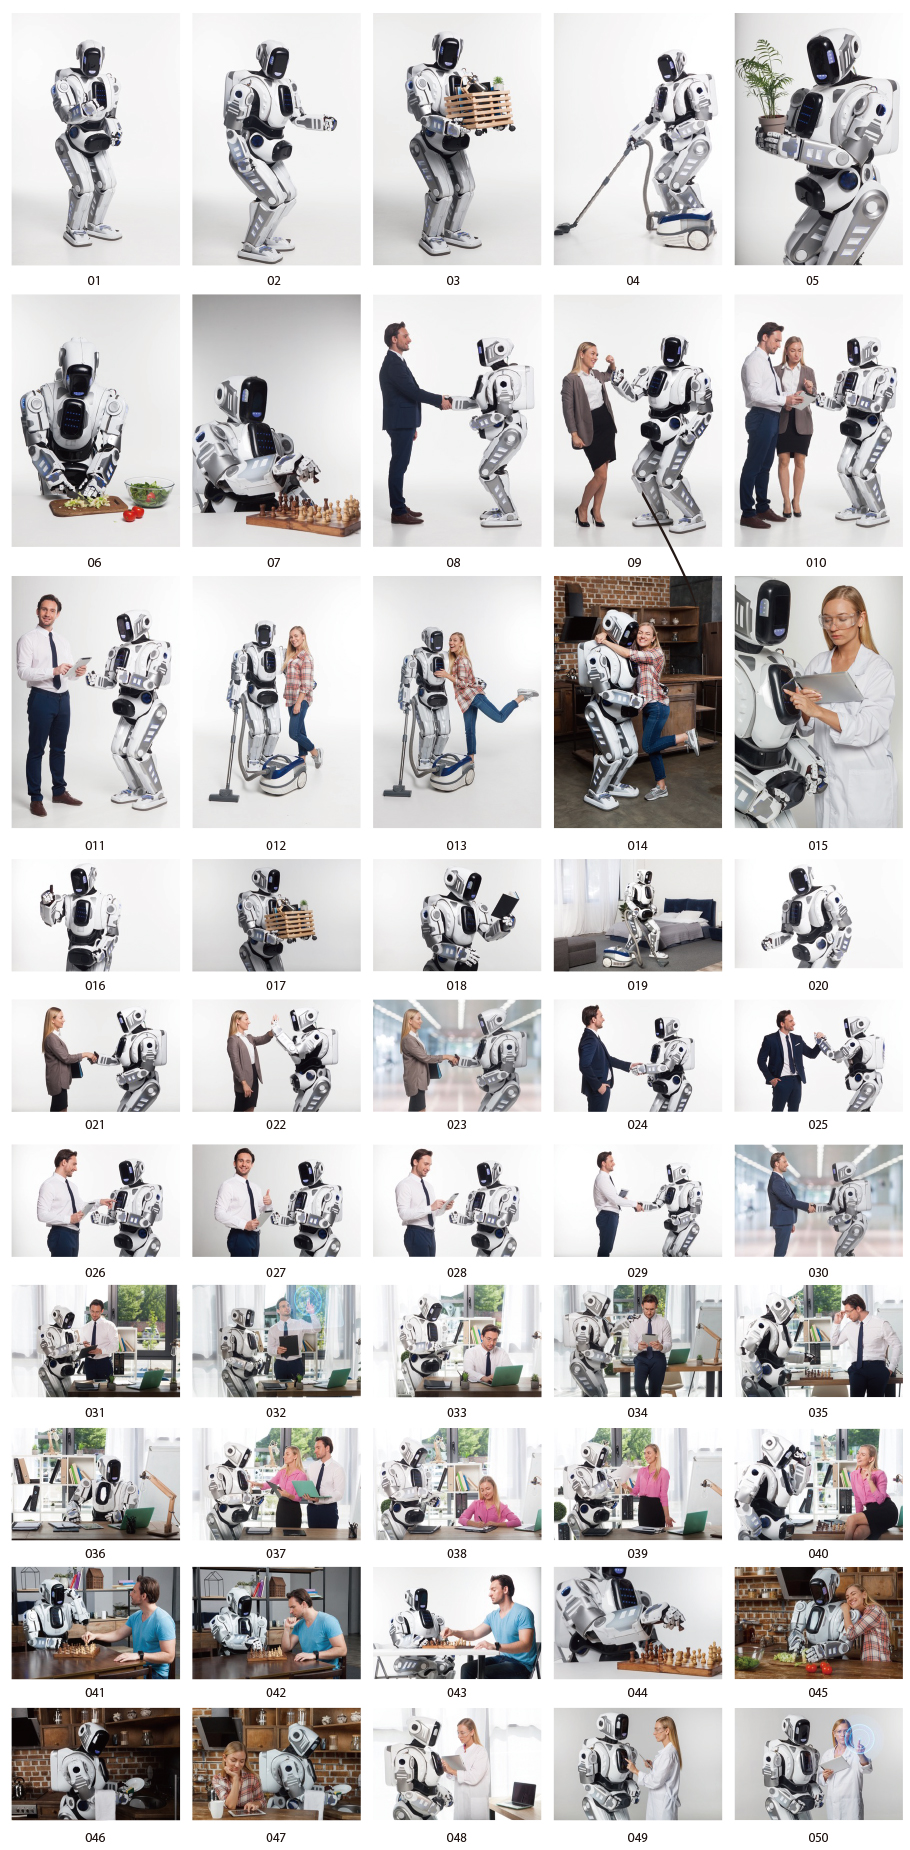 AI・ロボットの写真素材